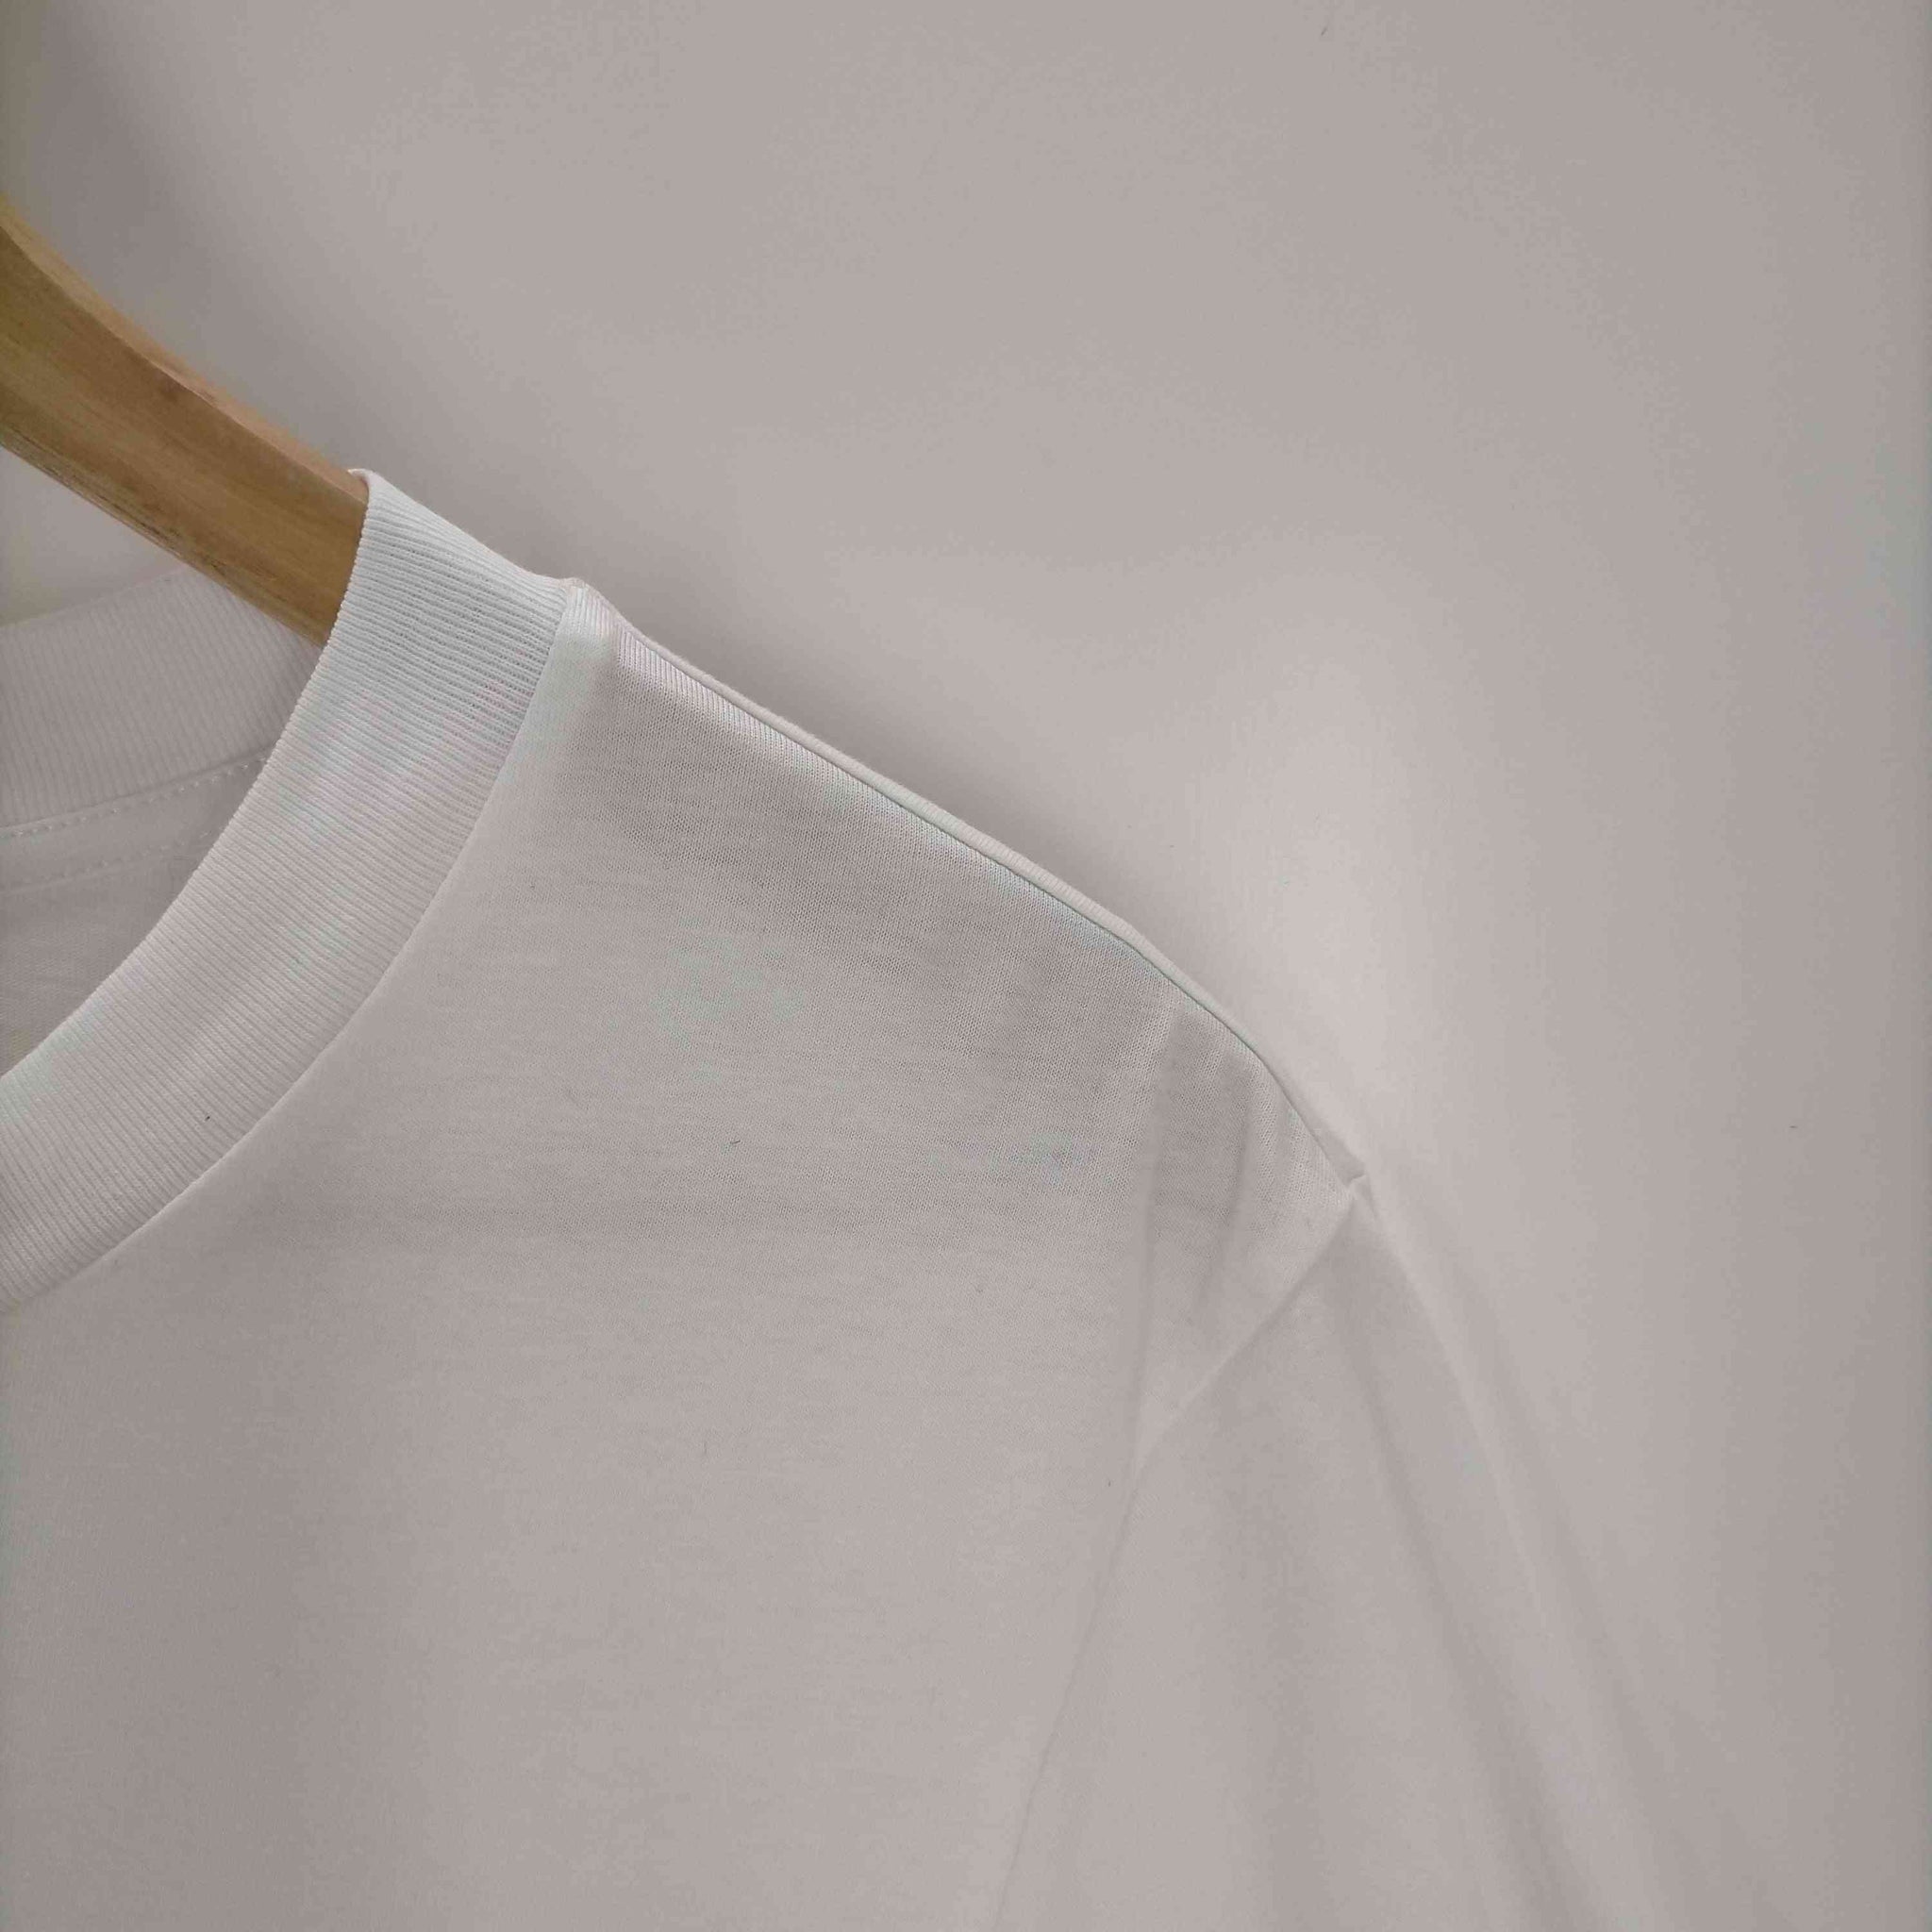 MARNI(マルニ)23SS ホワイト3D MARNIプリント コットンTシャツ